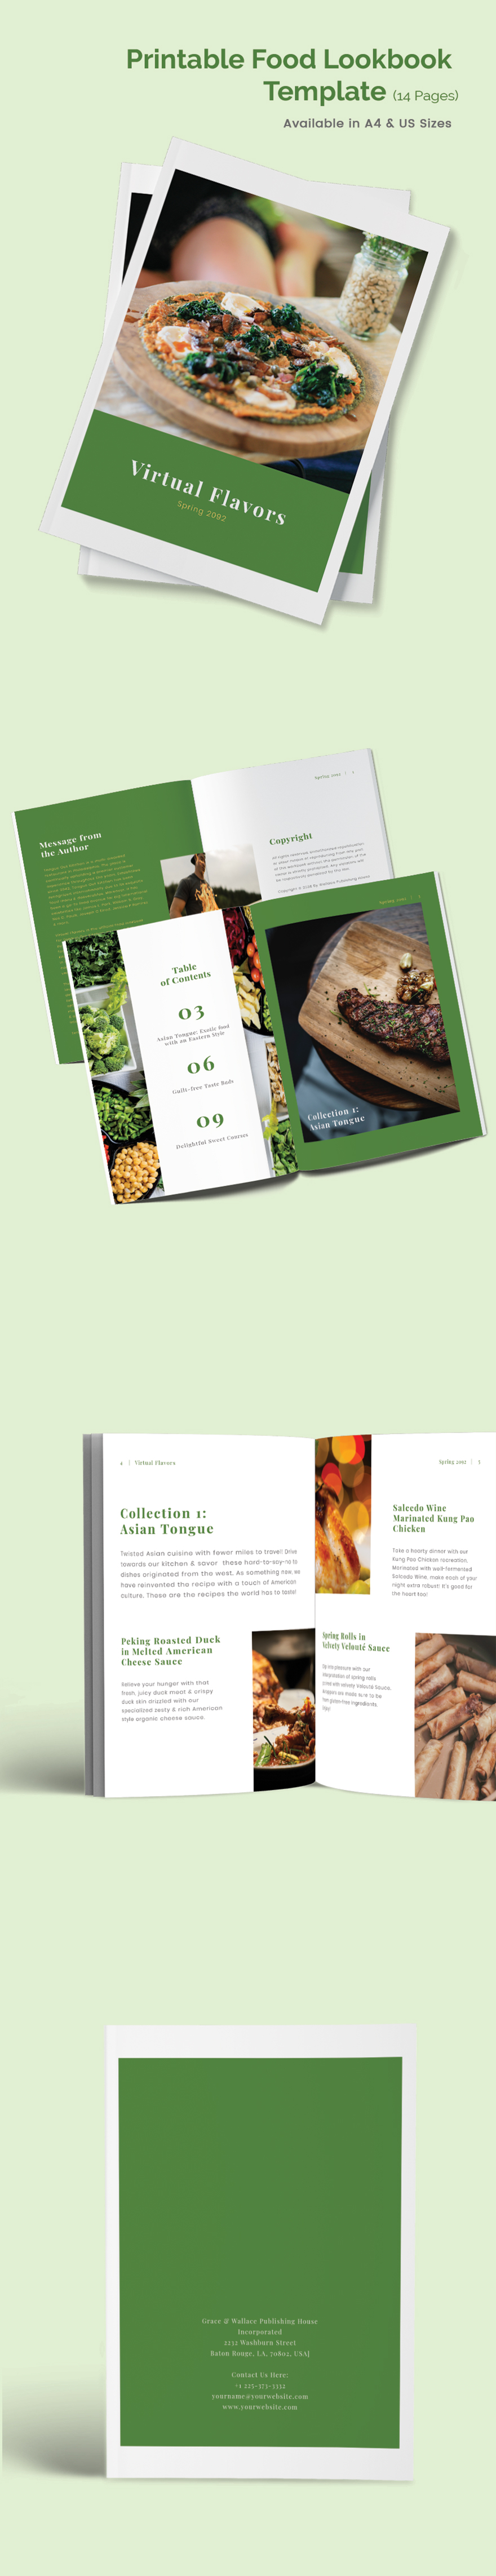 printable-food-lookbook-template-indesign-word-apple-pages